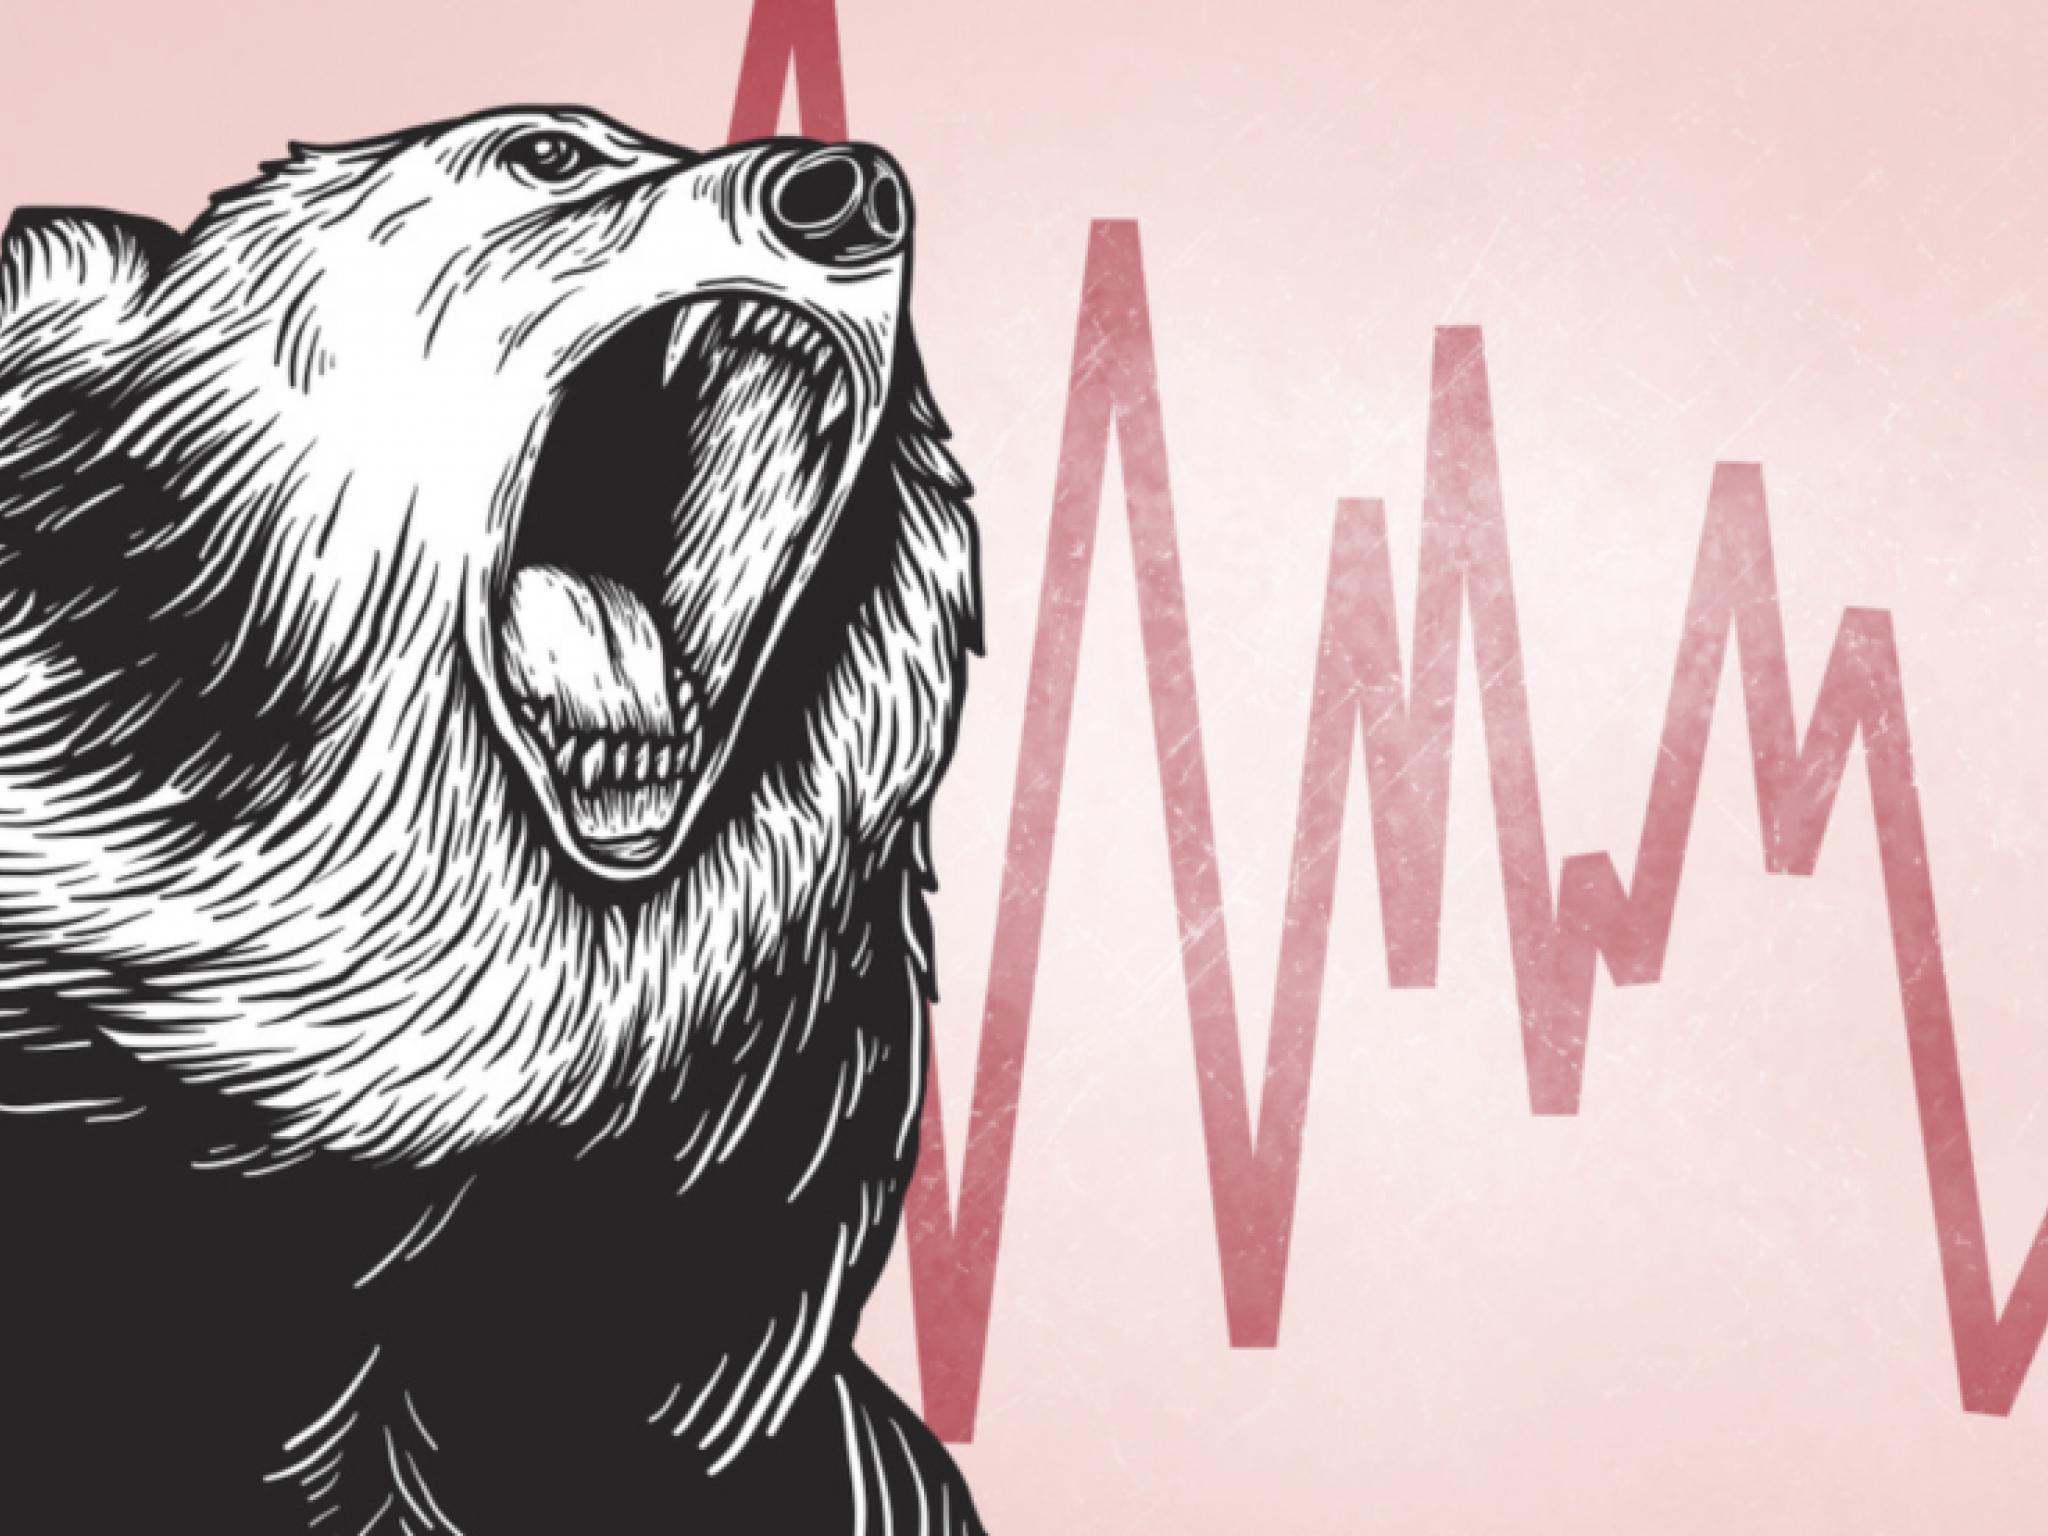  brace-for-impact-these-5-overvalued-stocks-face-bearish-pressure-in-impending-market-reversal 